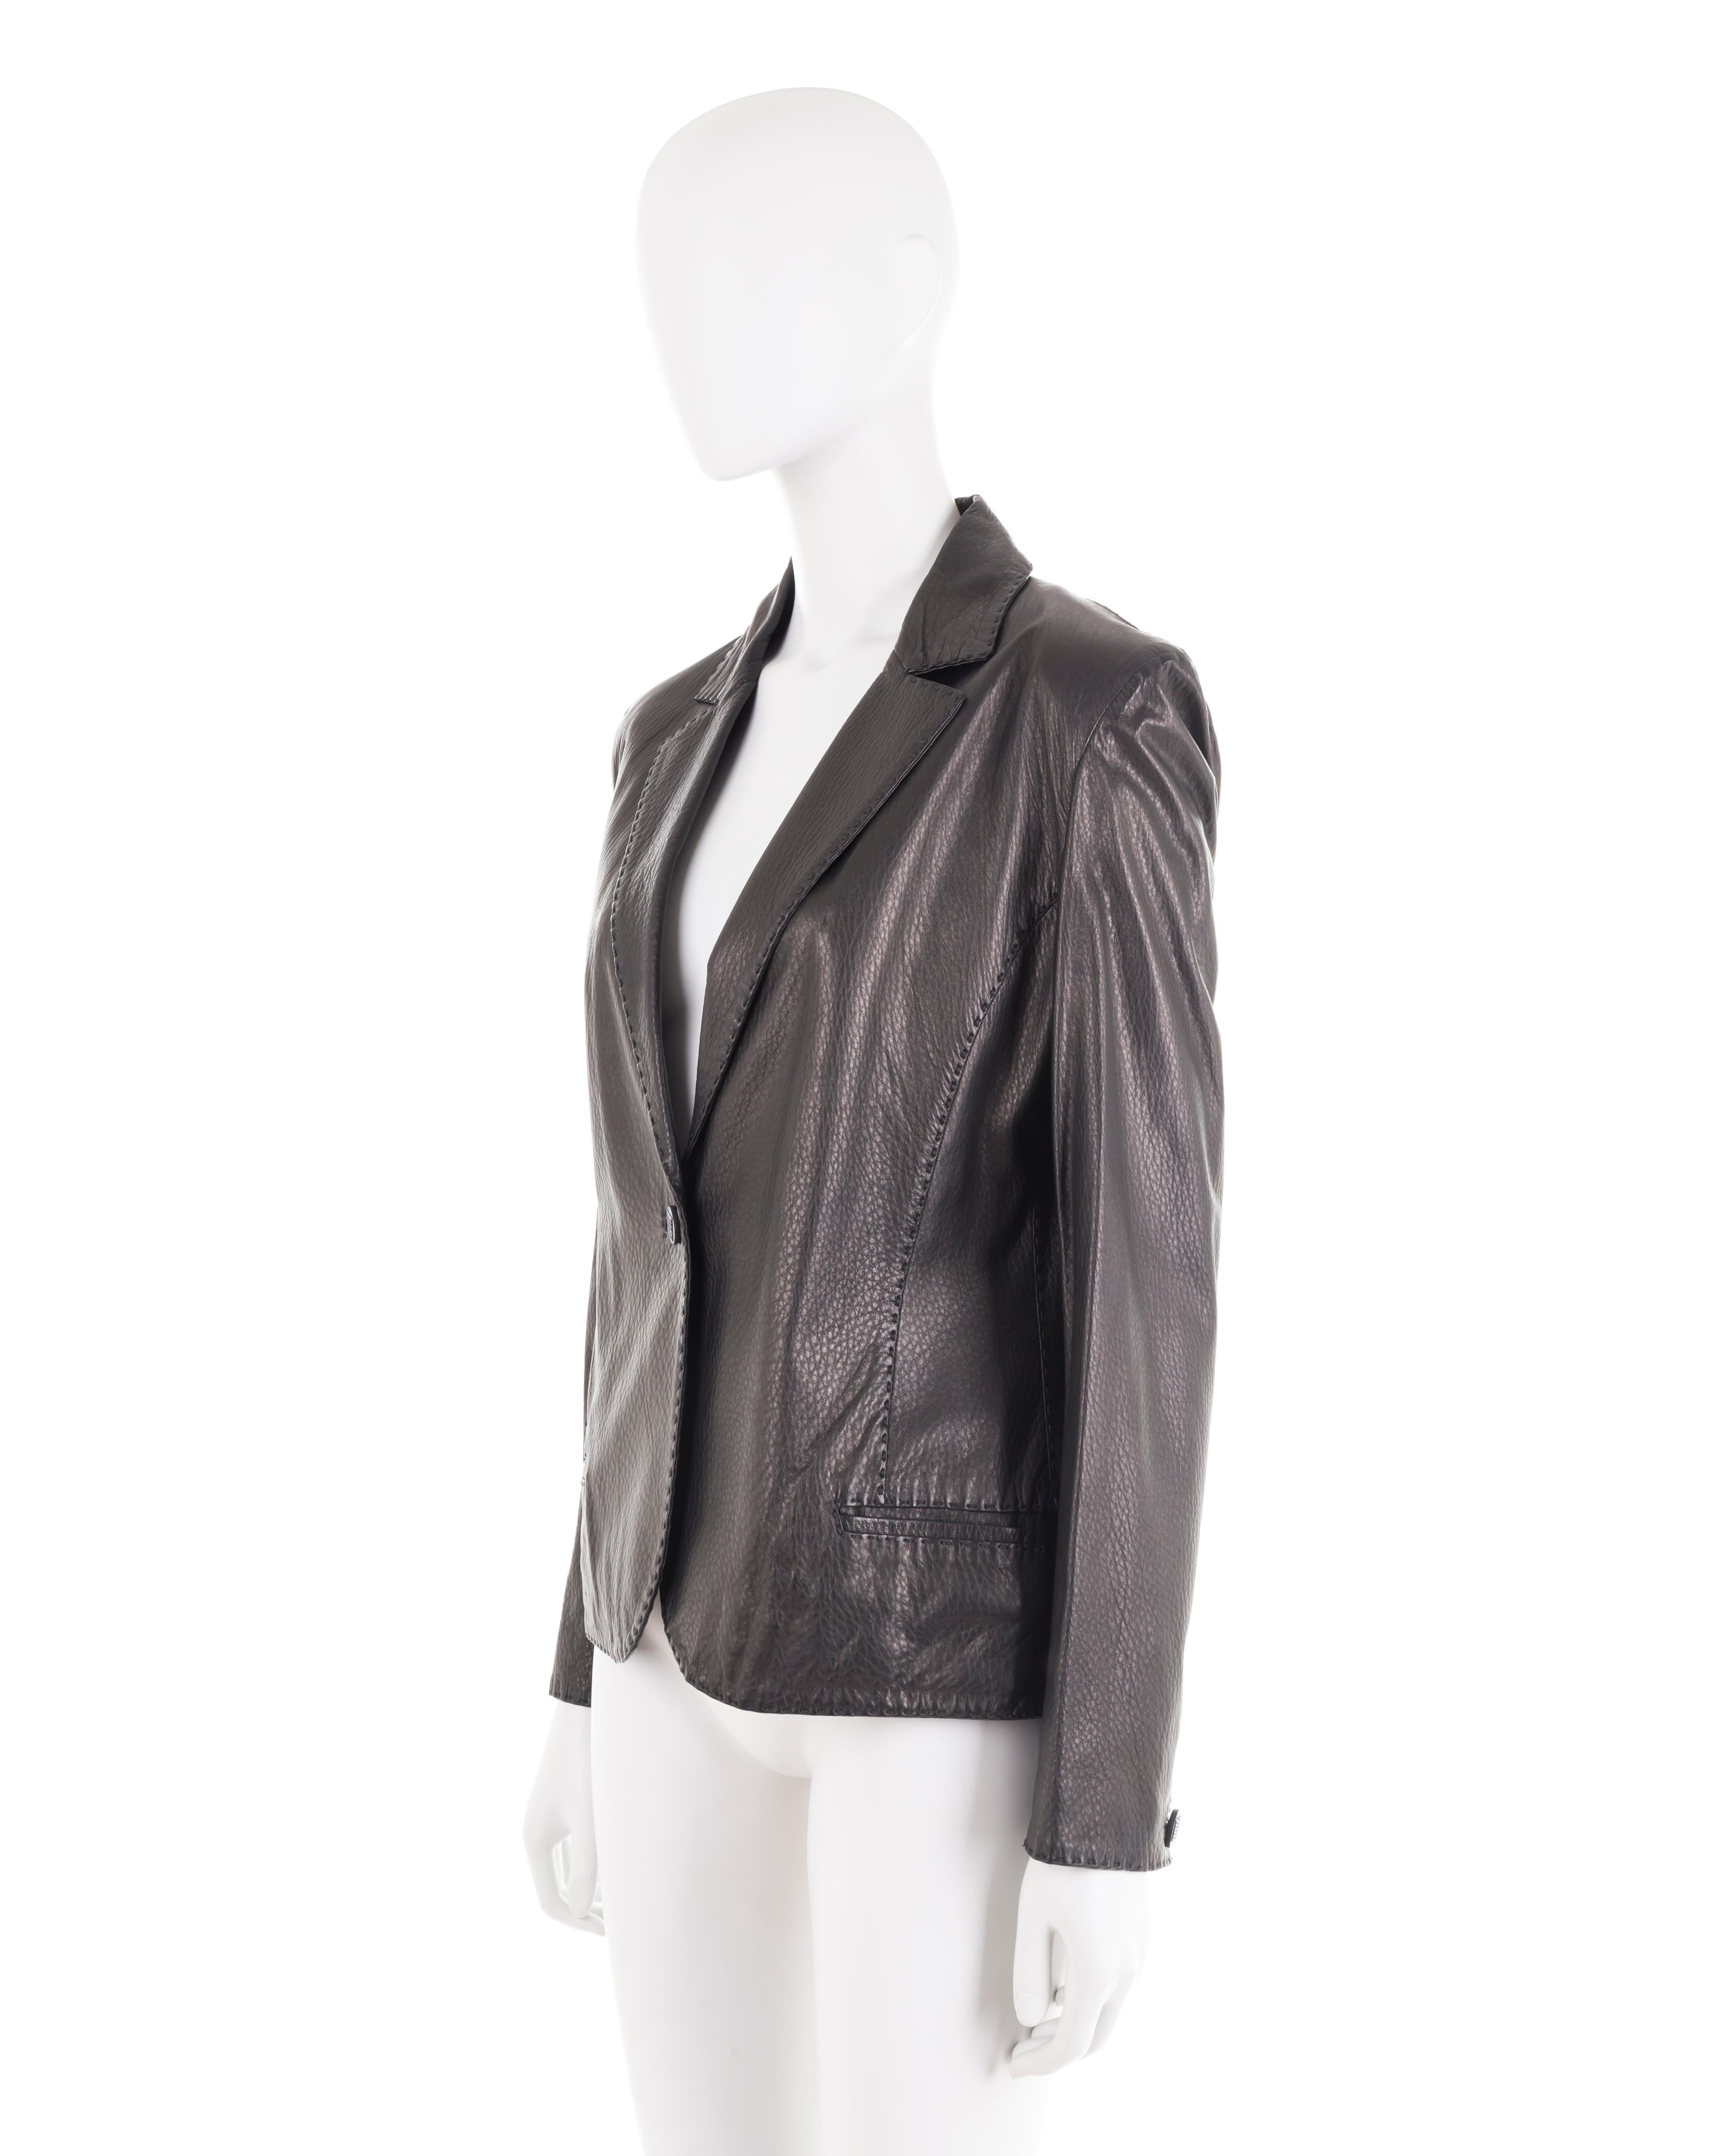 - Black lambskin fitted leather jacket
- “Fendi Selleria” line, handmade leather goods
- “Palazzo Fendi” embossed buttons
